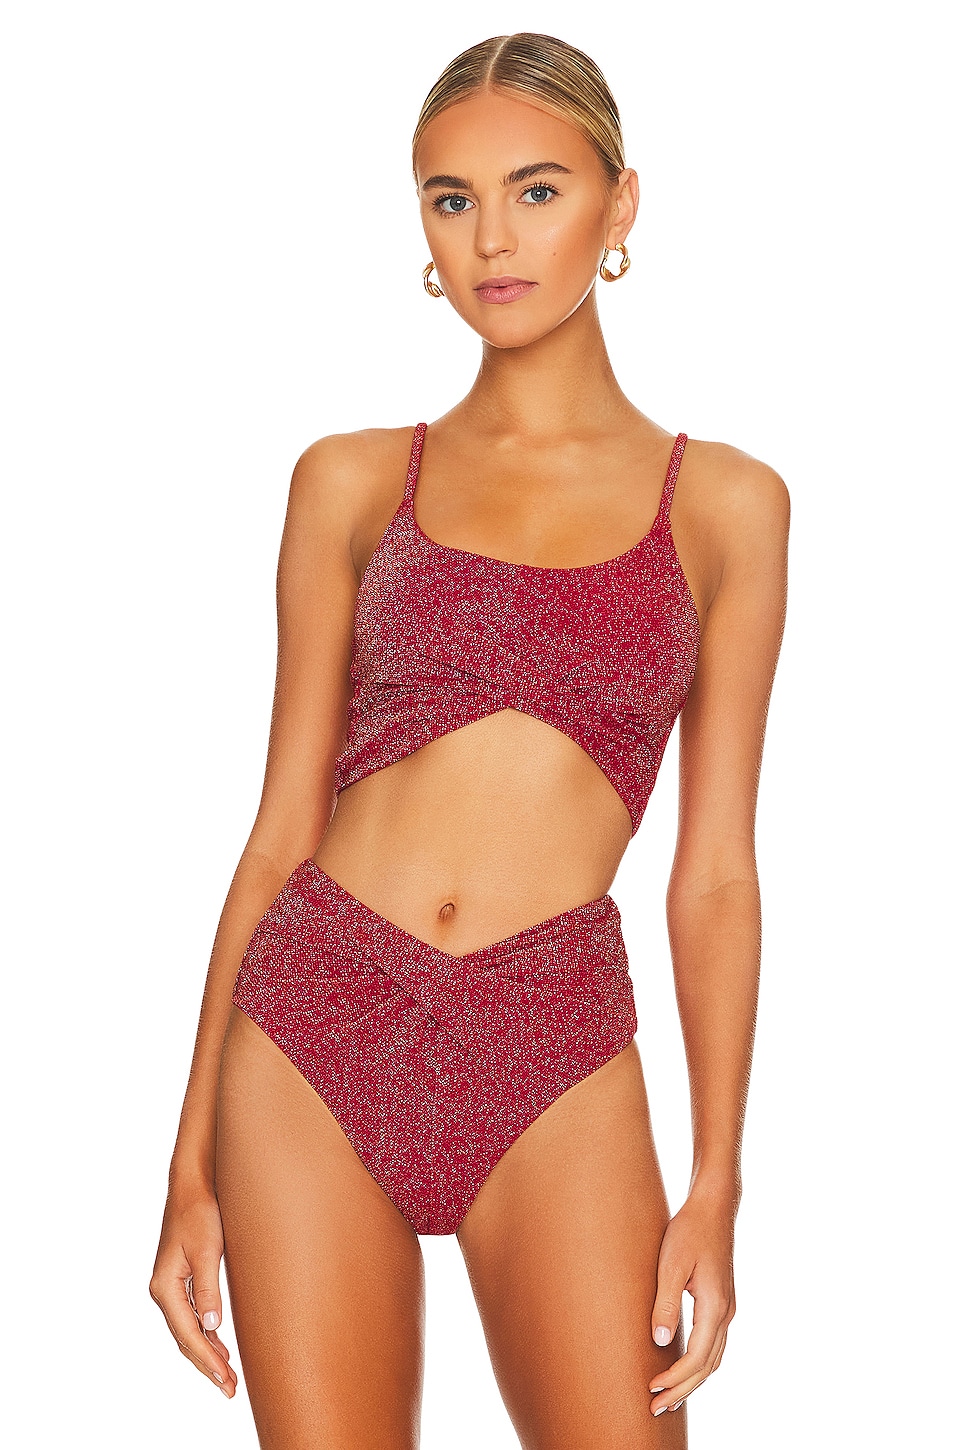 BEACH RIOT Kenzie Bikini Top in Jolly Red Shine